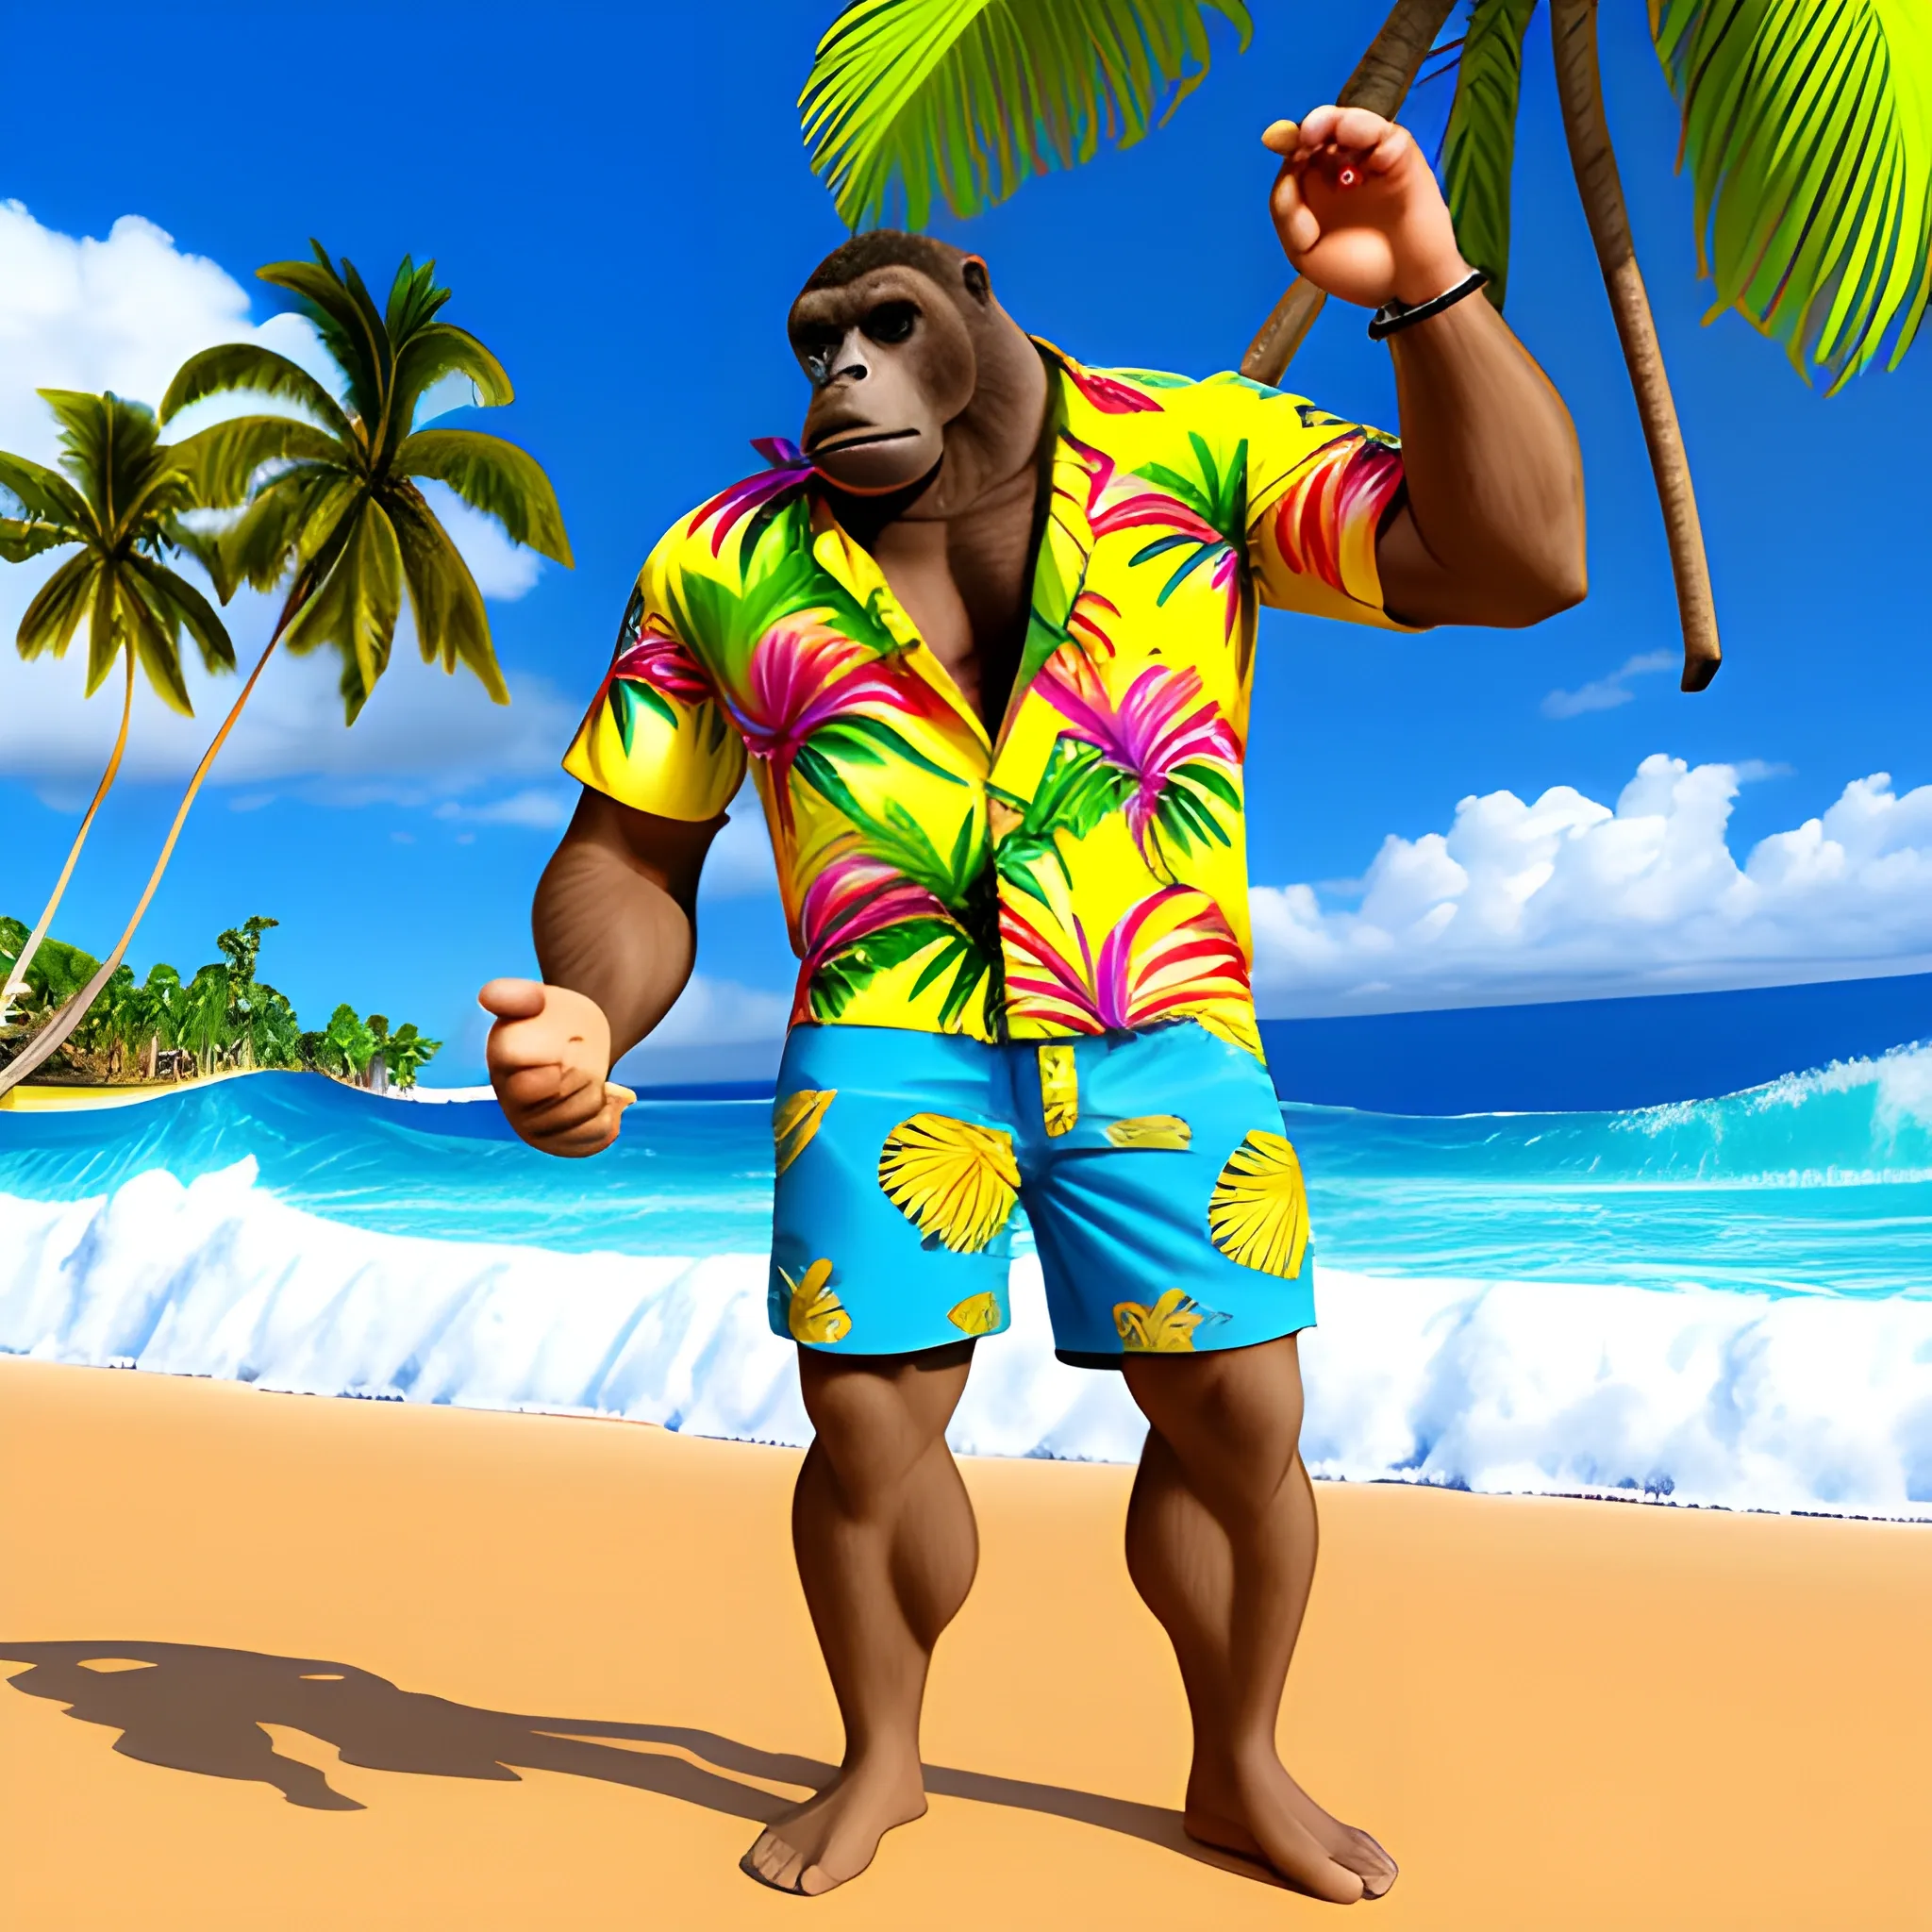 surfing male gorilla with hawaiian colorful shirt, big wave, full body, surfer gorilla, shorts, wave, smoking cigar, surfing on surfboard, big wave, hawaii shirt, cigar, highly detailed, photographic, sunny island background, palms, sand beach, 3D, Cartoon